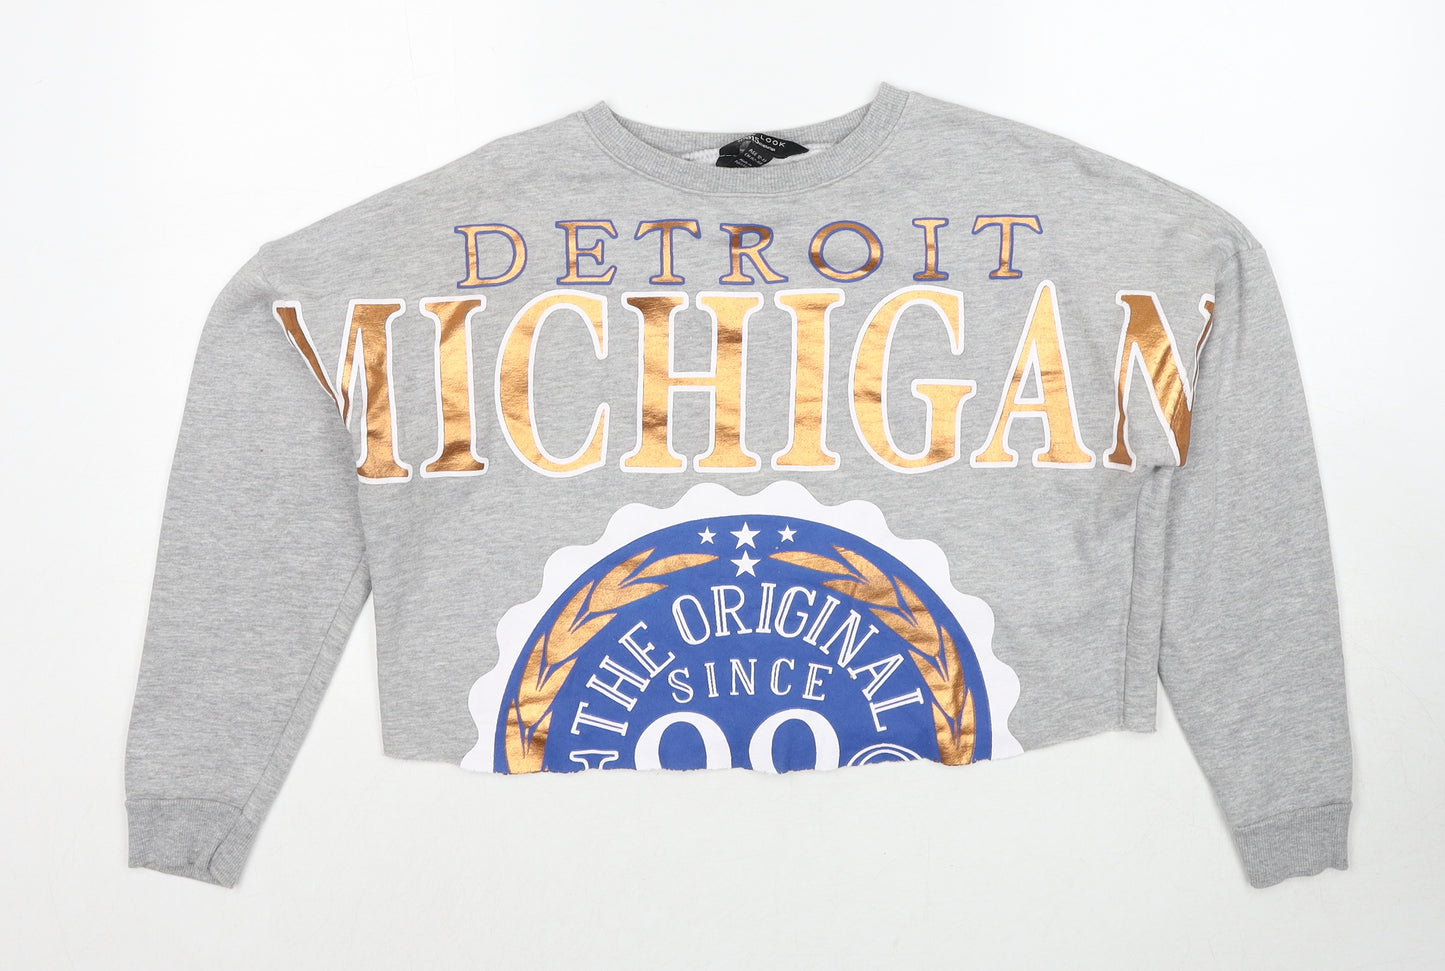 New Look Girls Grey Cotton Pullover Sweatshirt Size 12-13 Years Pullover - Detroit Michigan